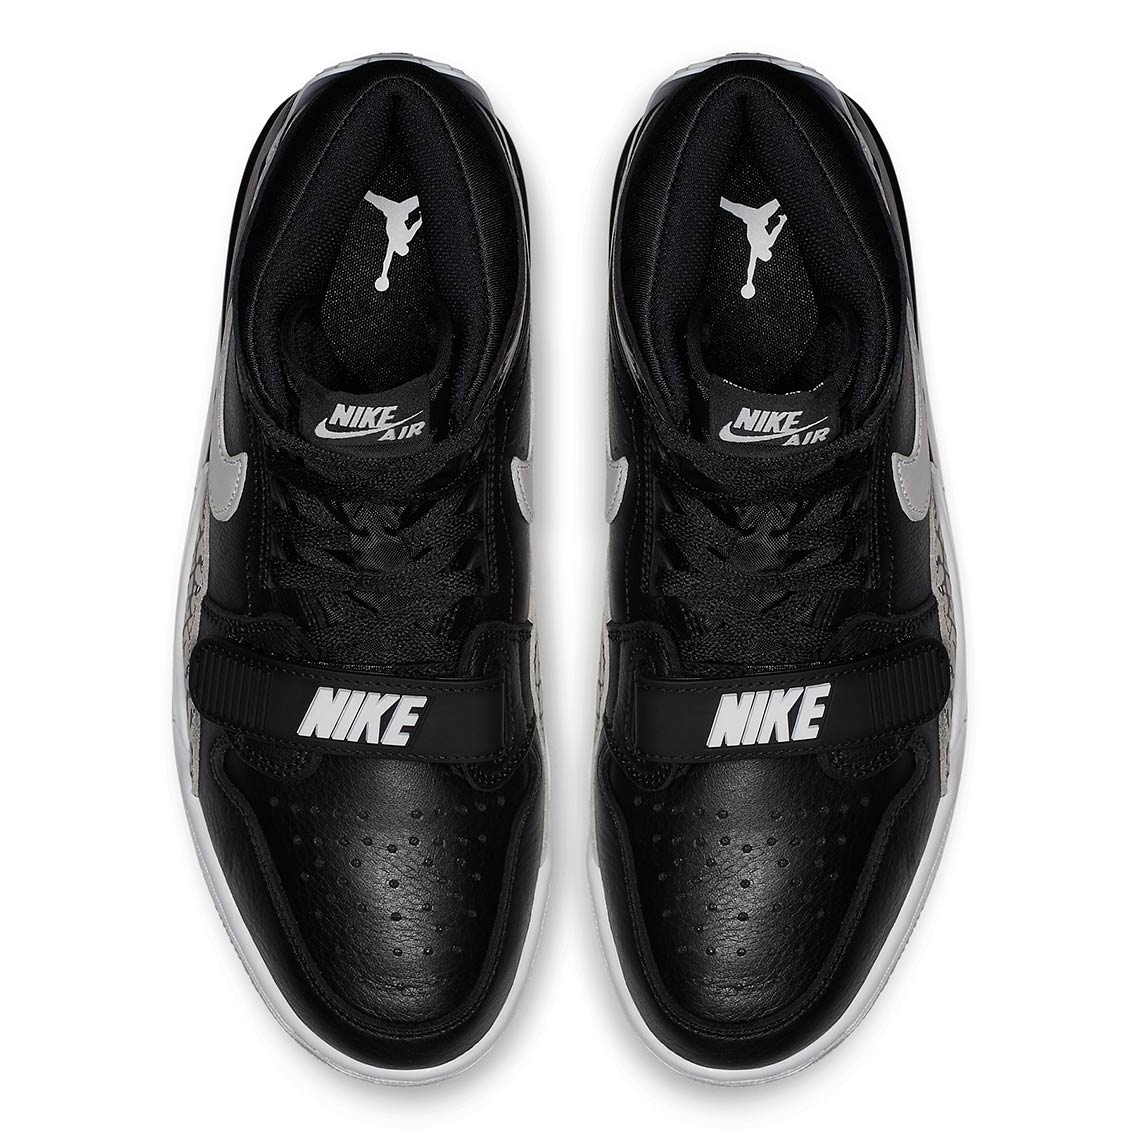 Jordan Legacy 312 Black Cement Release Info | SneakerNews.com